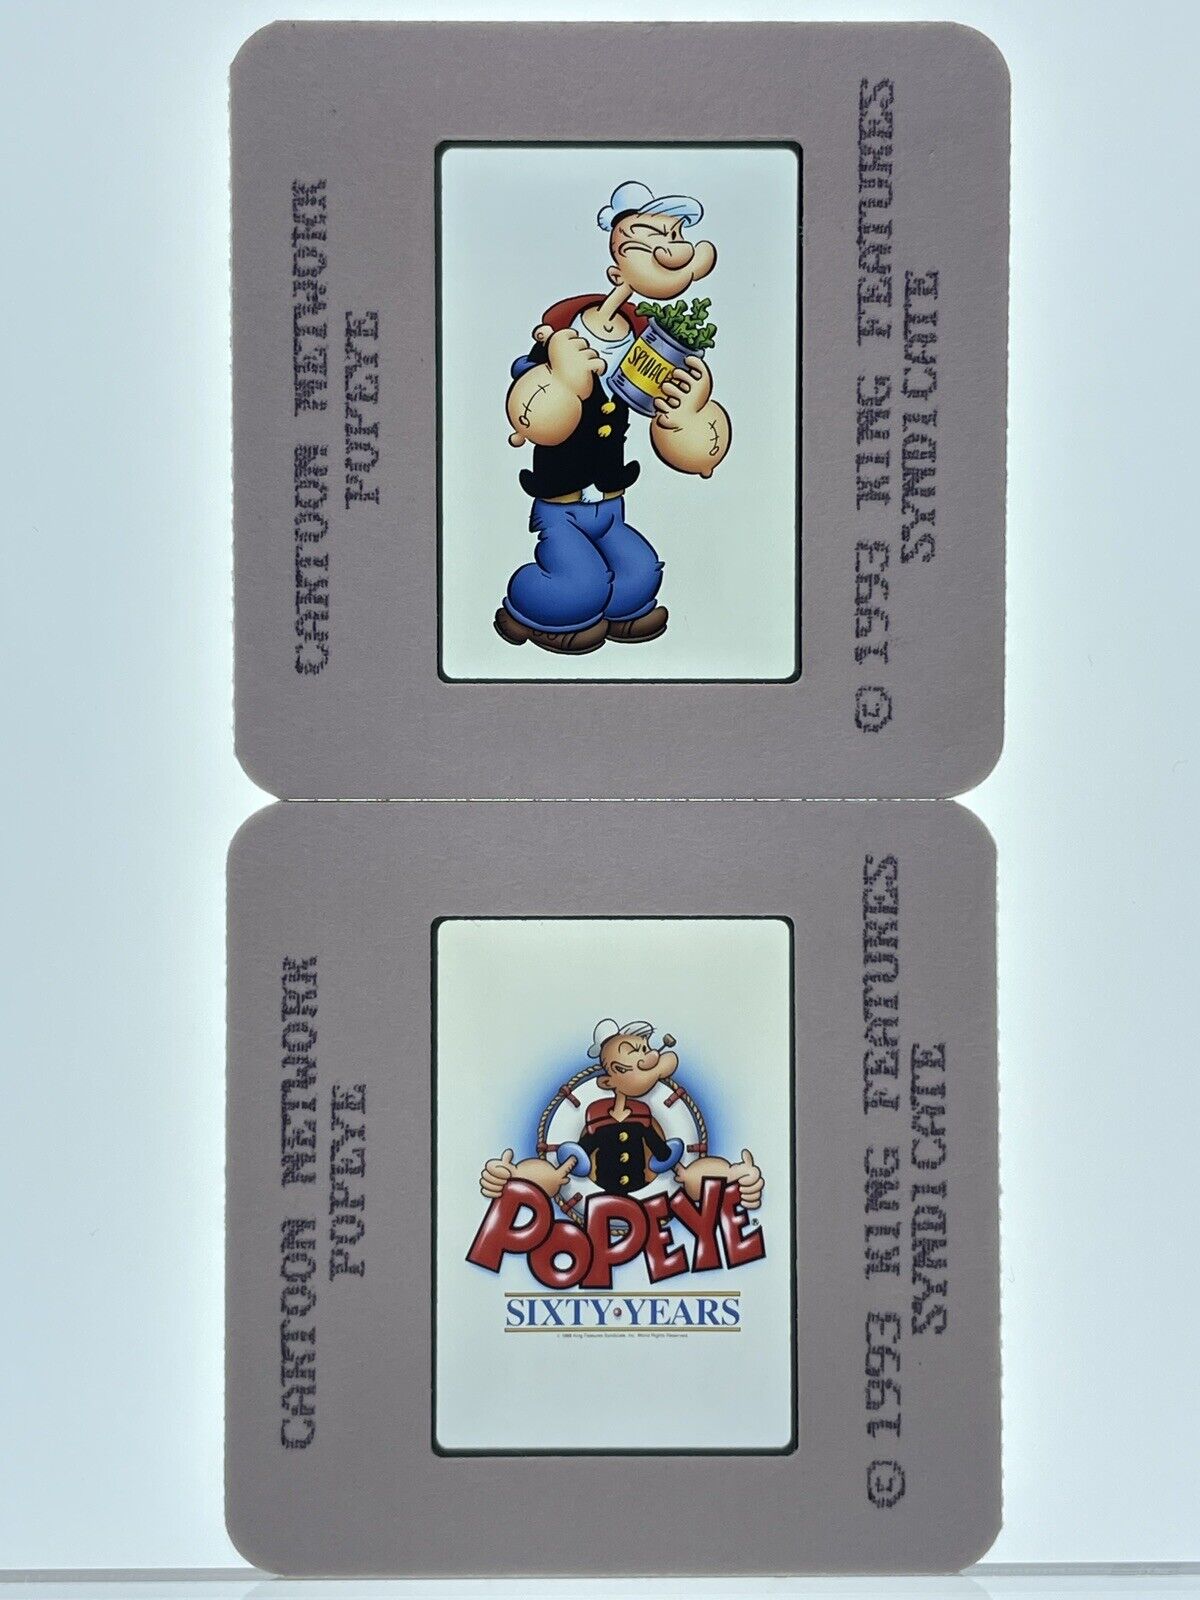 Popeye 35mm Slides Animated Cartoon Network 60 years Vintage Promo Lot of 2 Без бренда